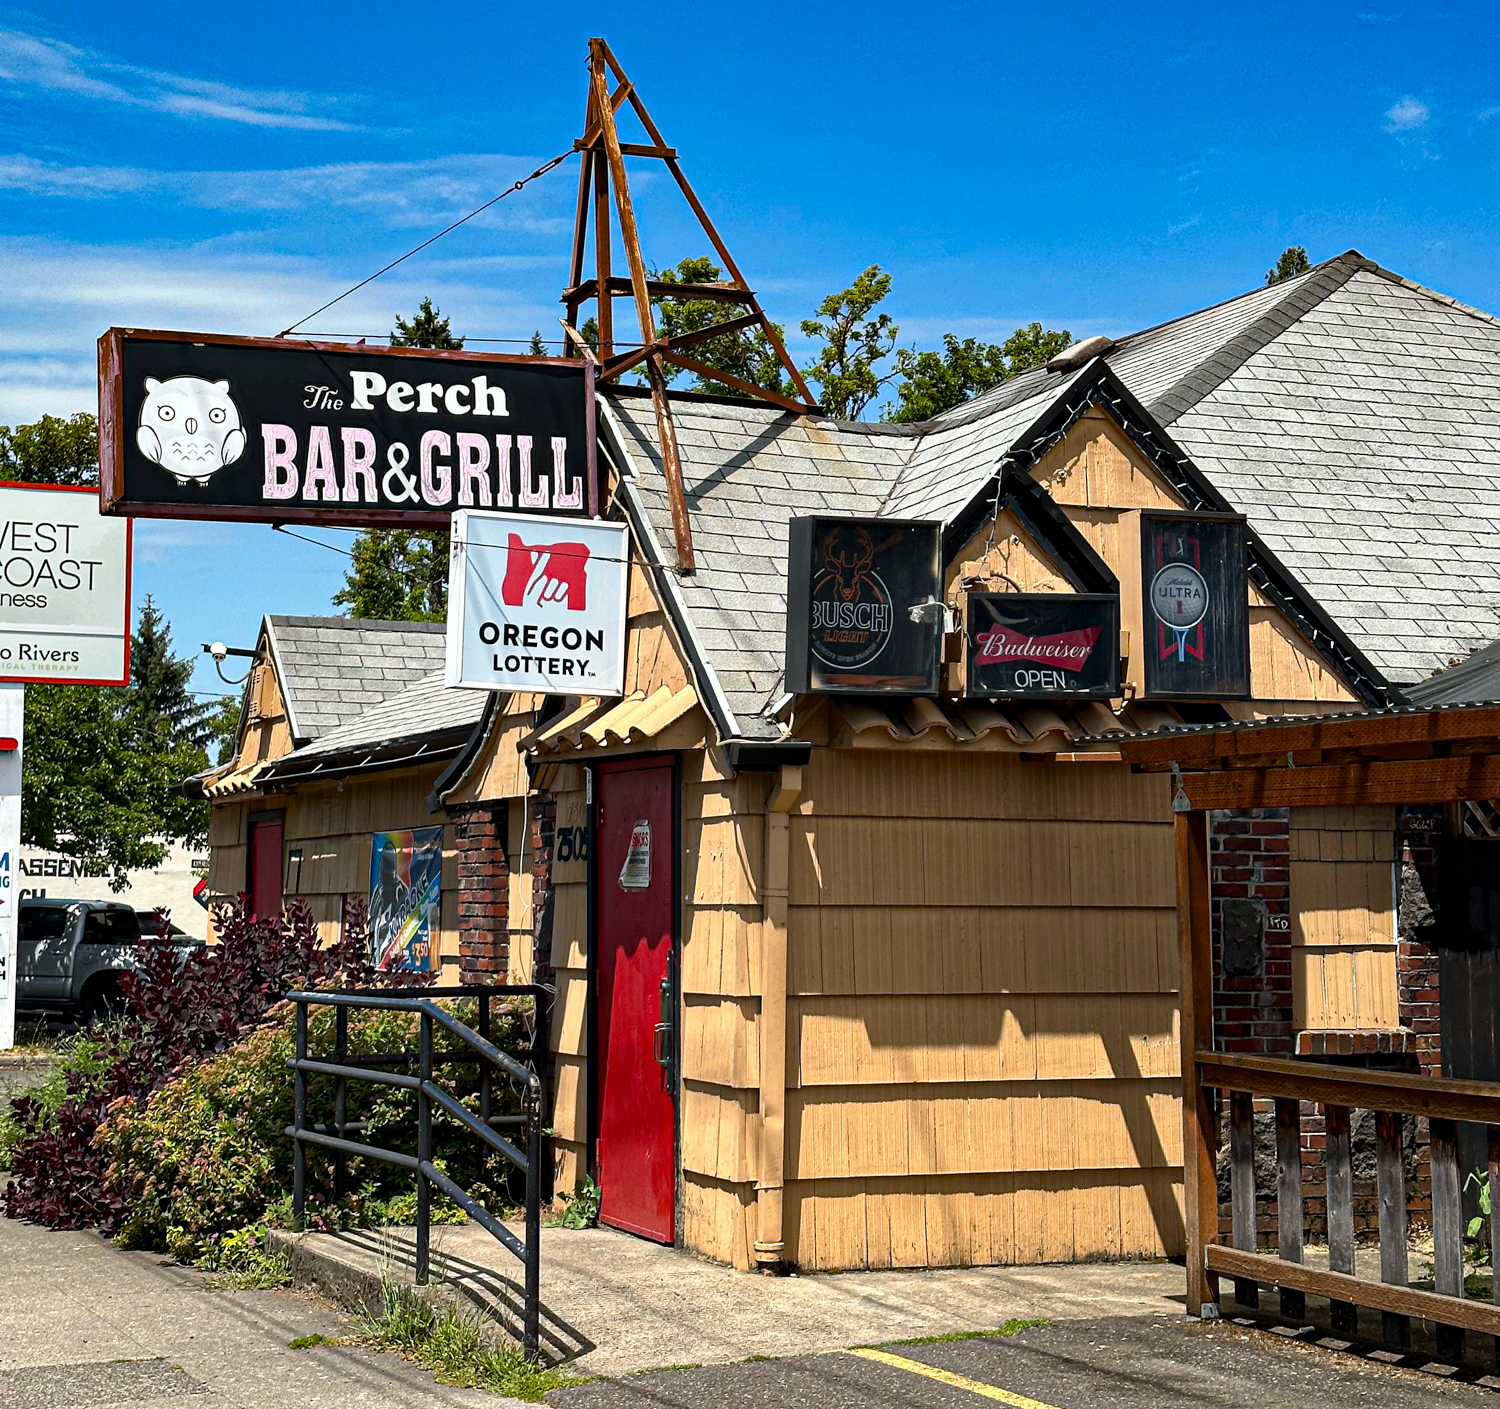 The Perch Bar & Grill